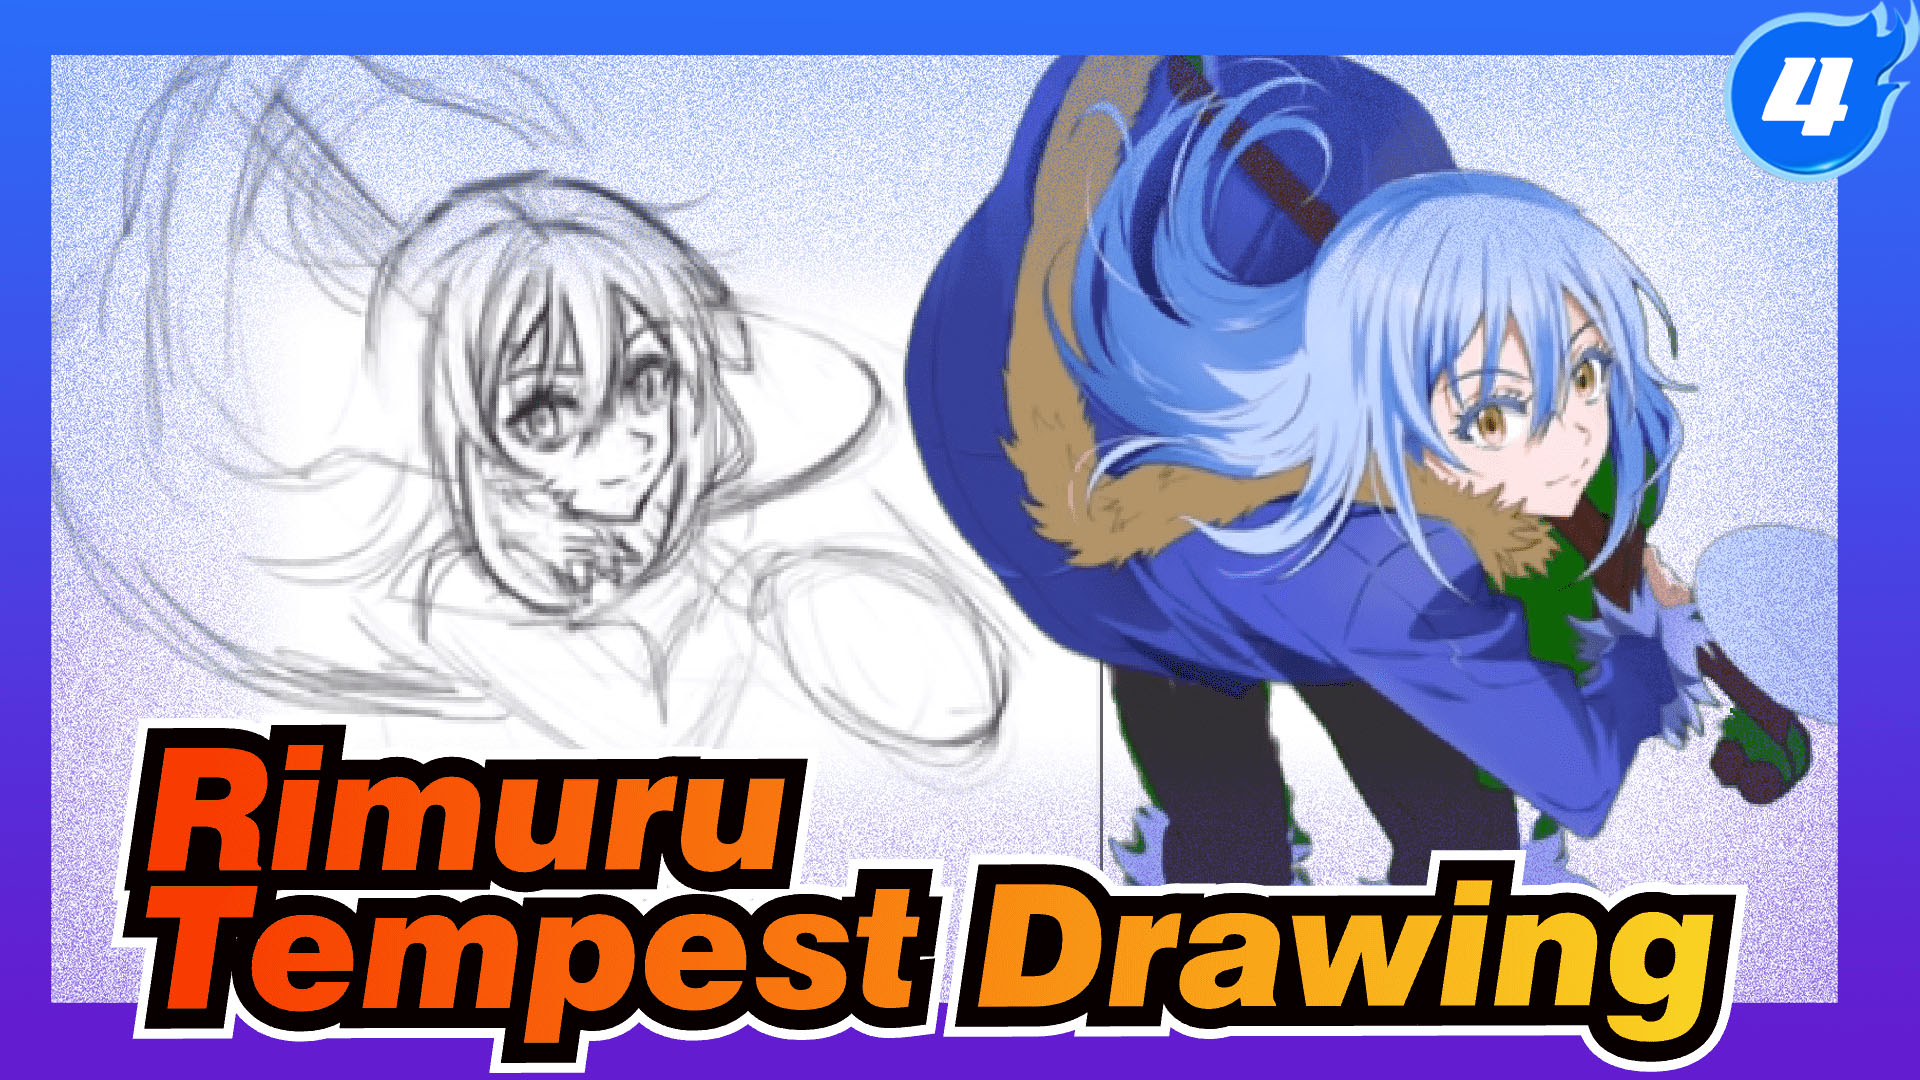 How to draw Rimuru Tempest - That Time I Got Reincarnated as a